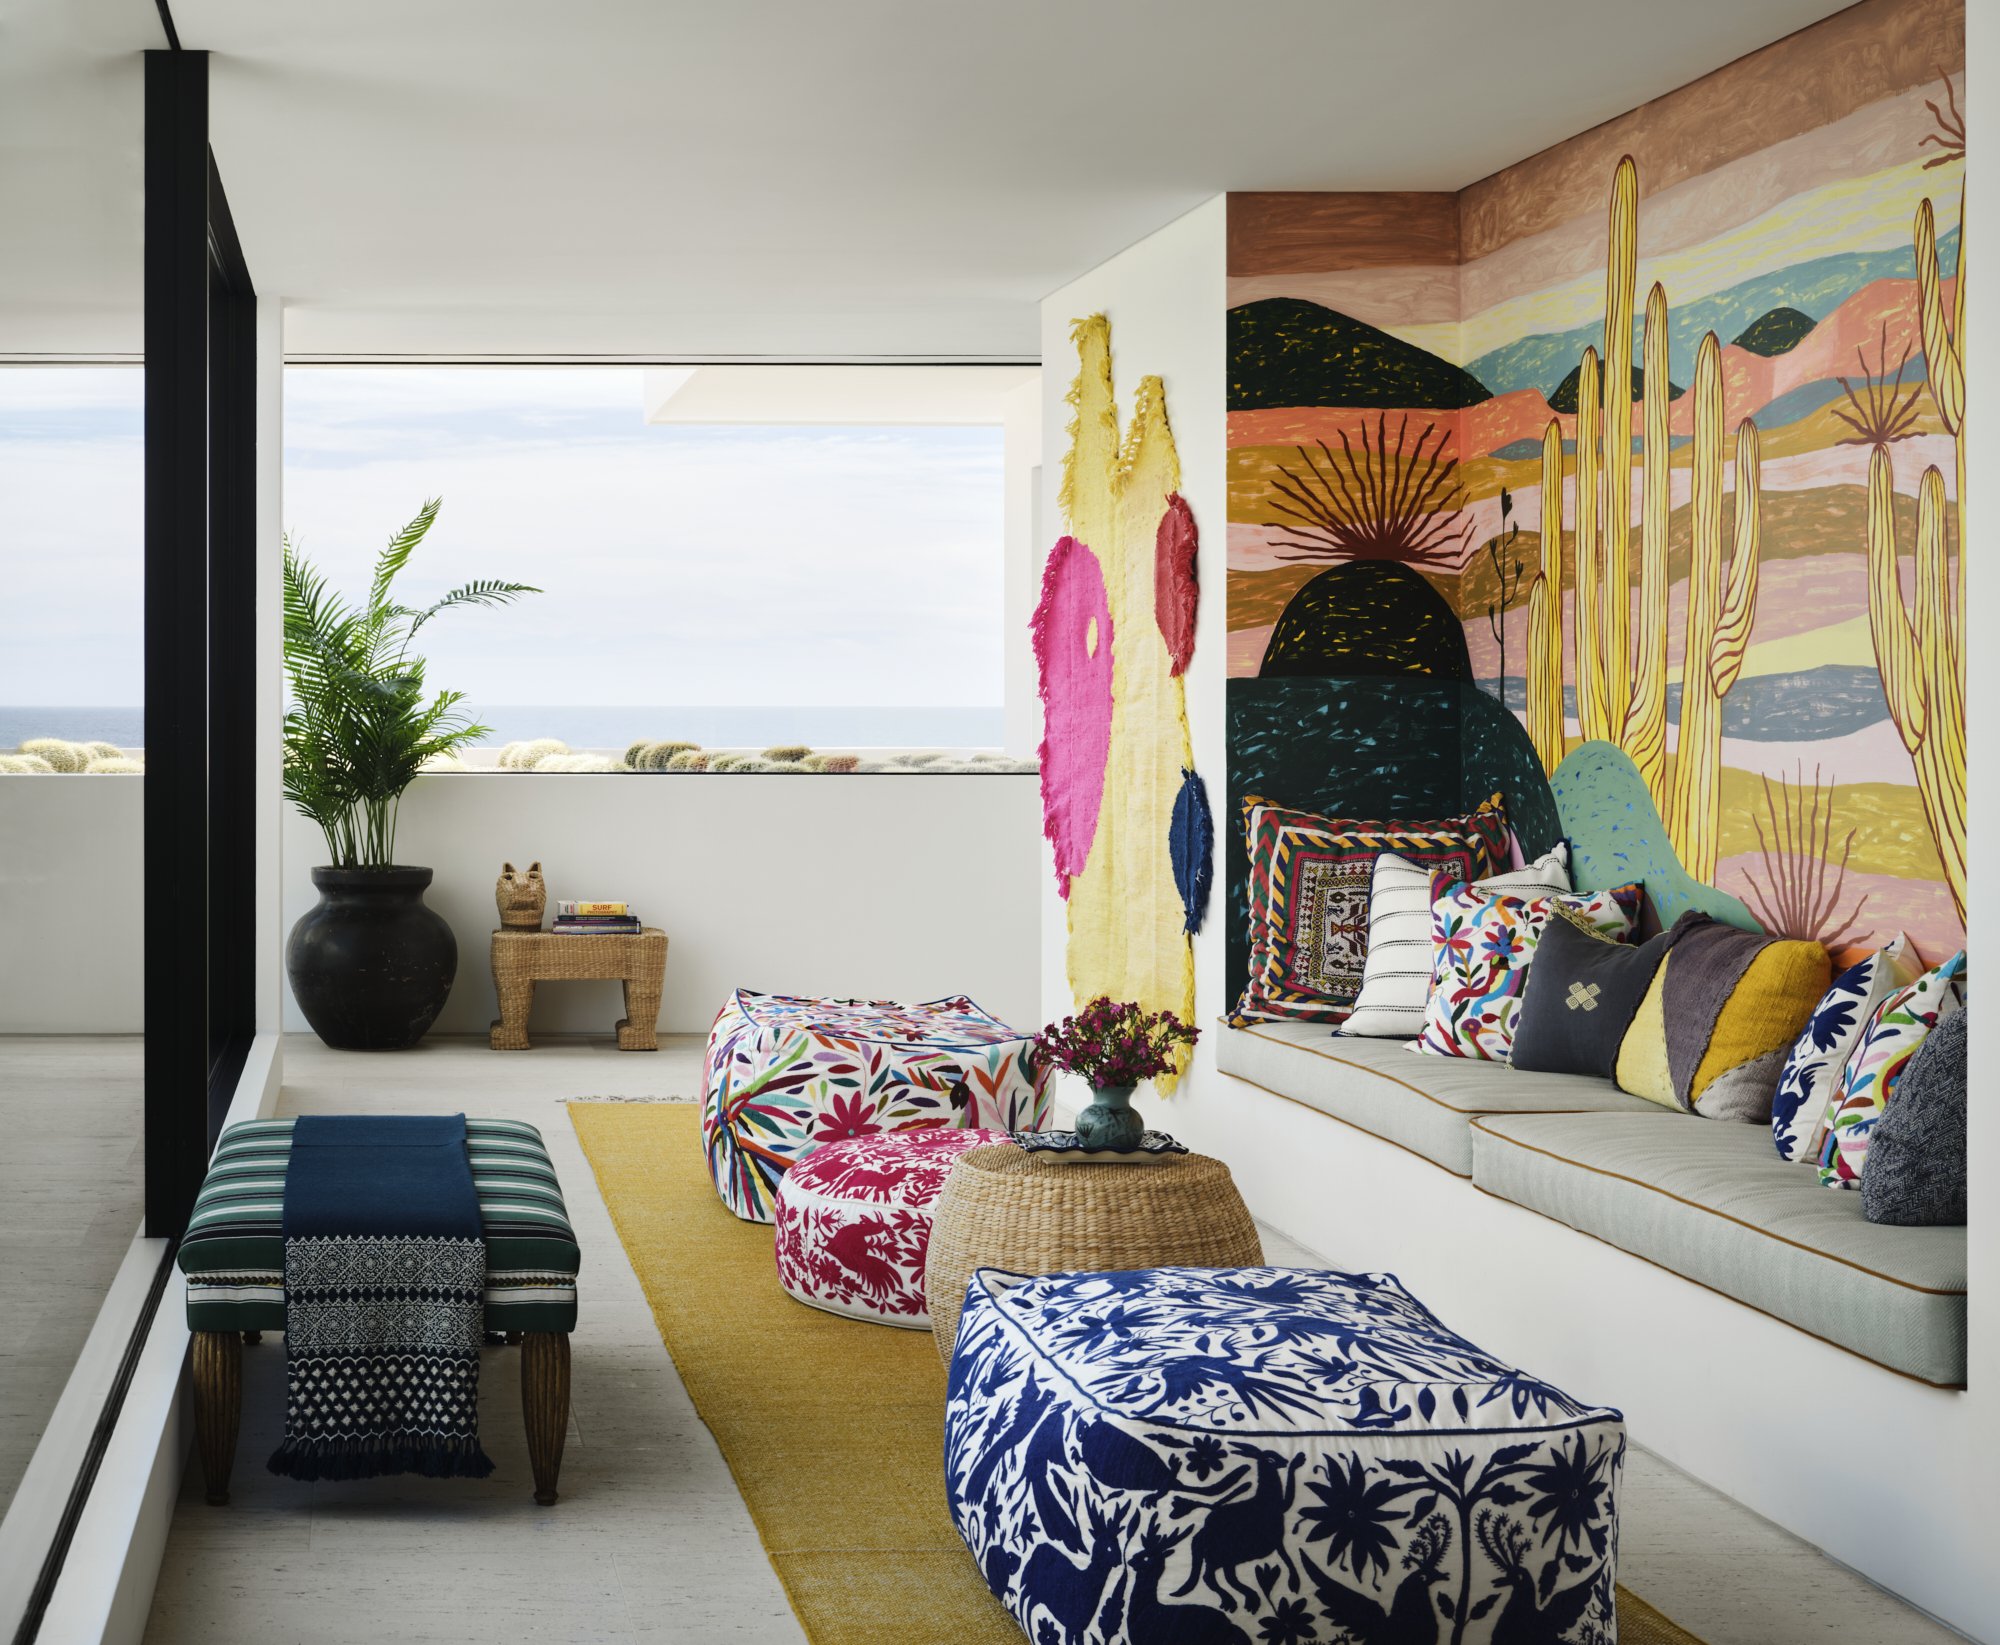 sasha Adler designer of this beach house